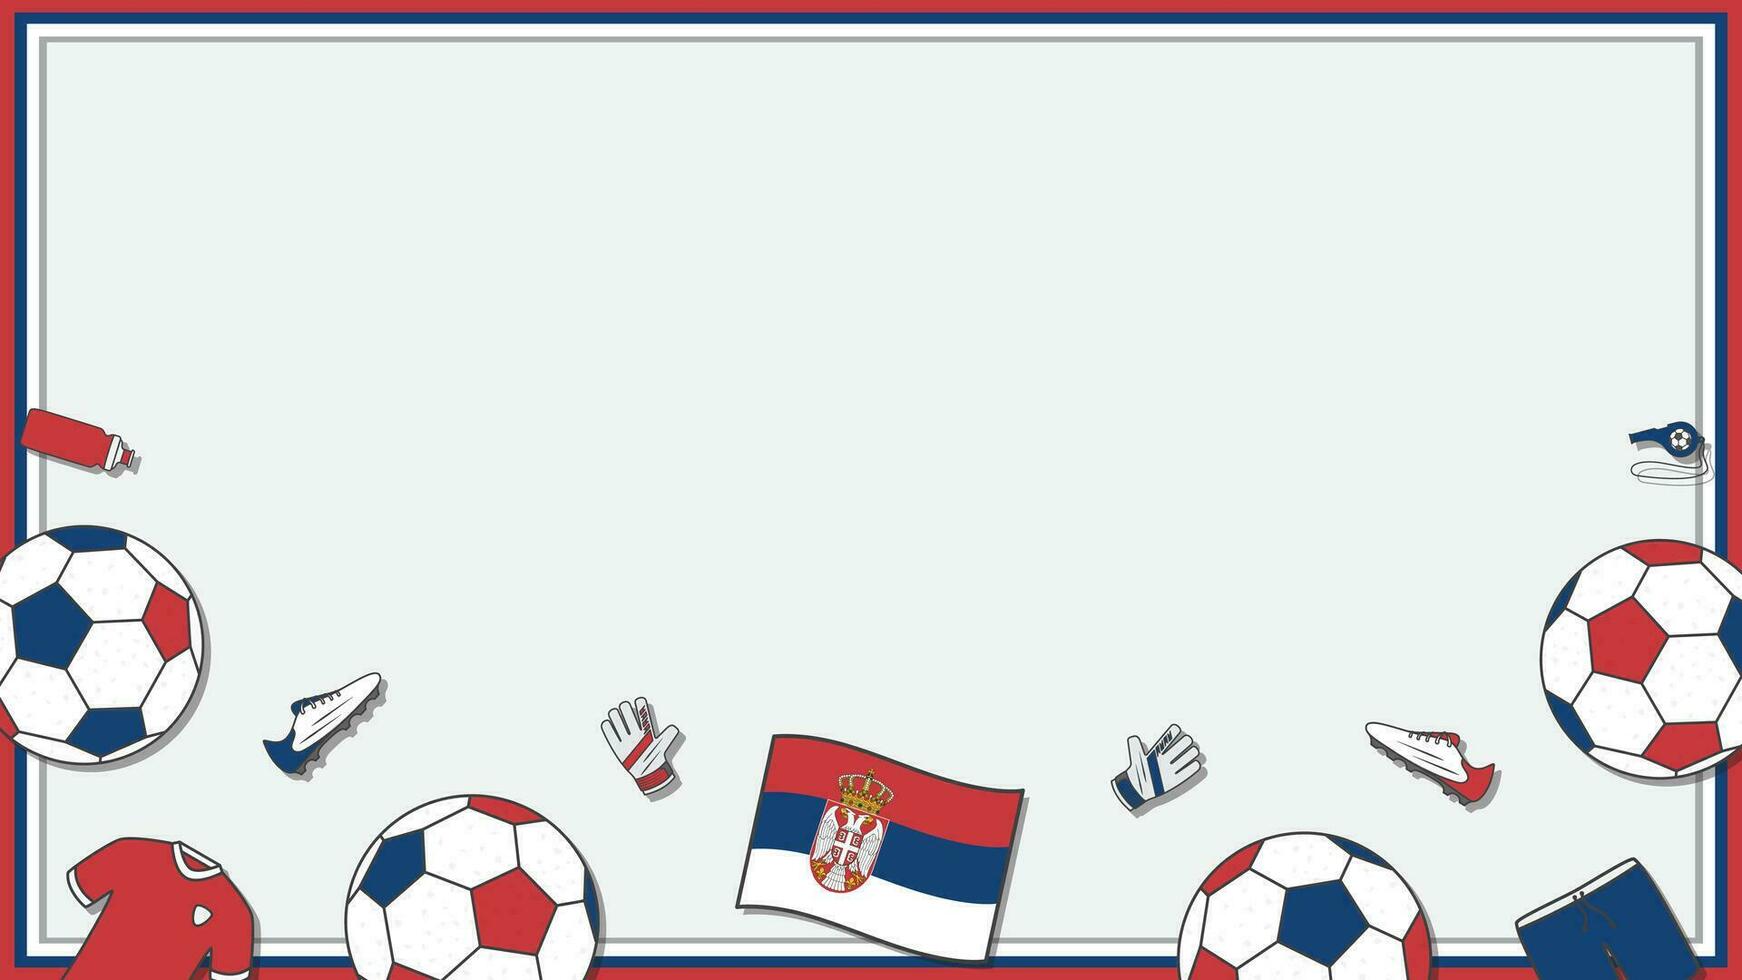 Football Background Design Template. Football Cartoon Vector Illustration. Soccer In Serbia